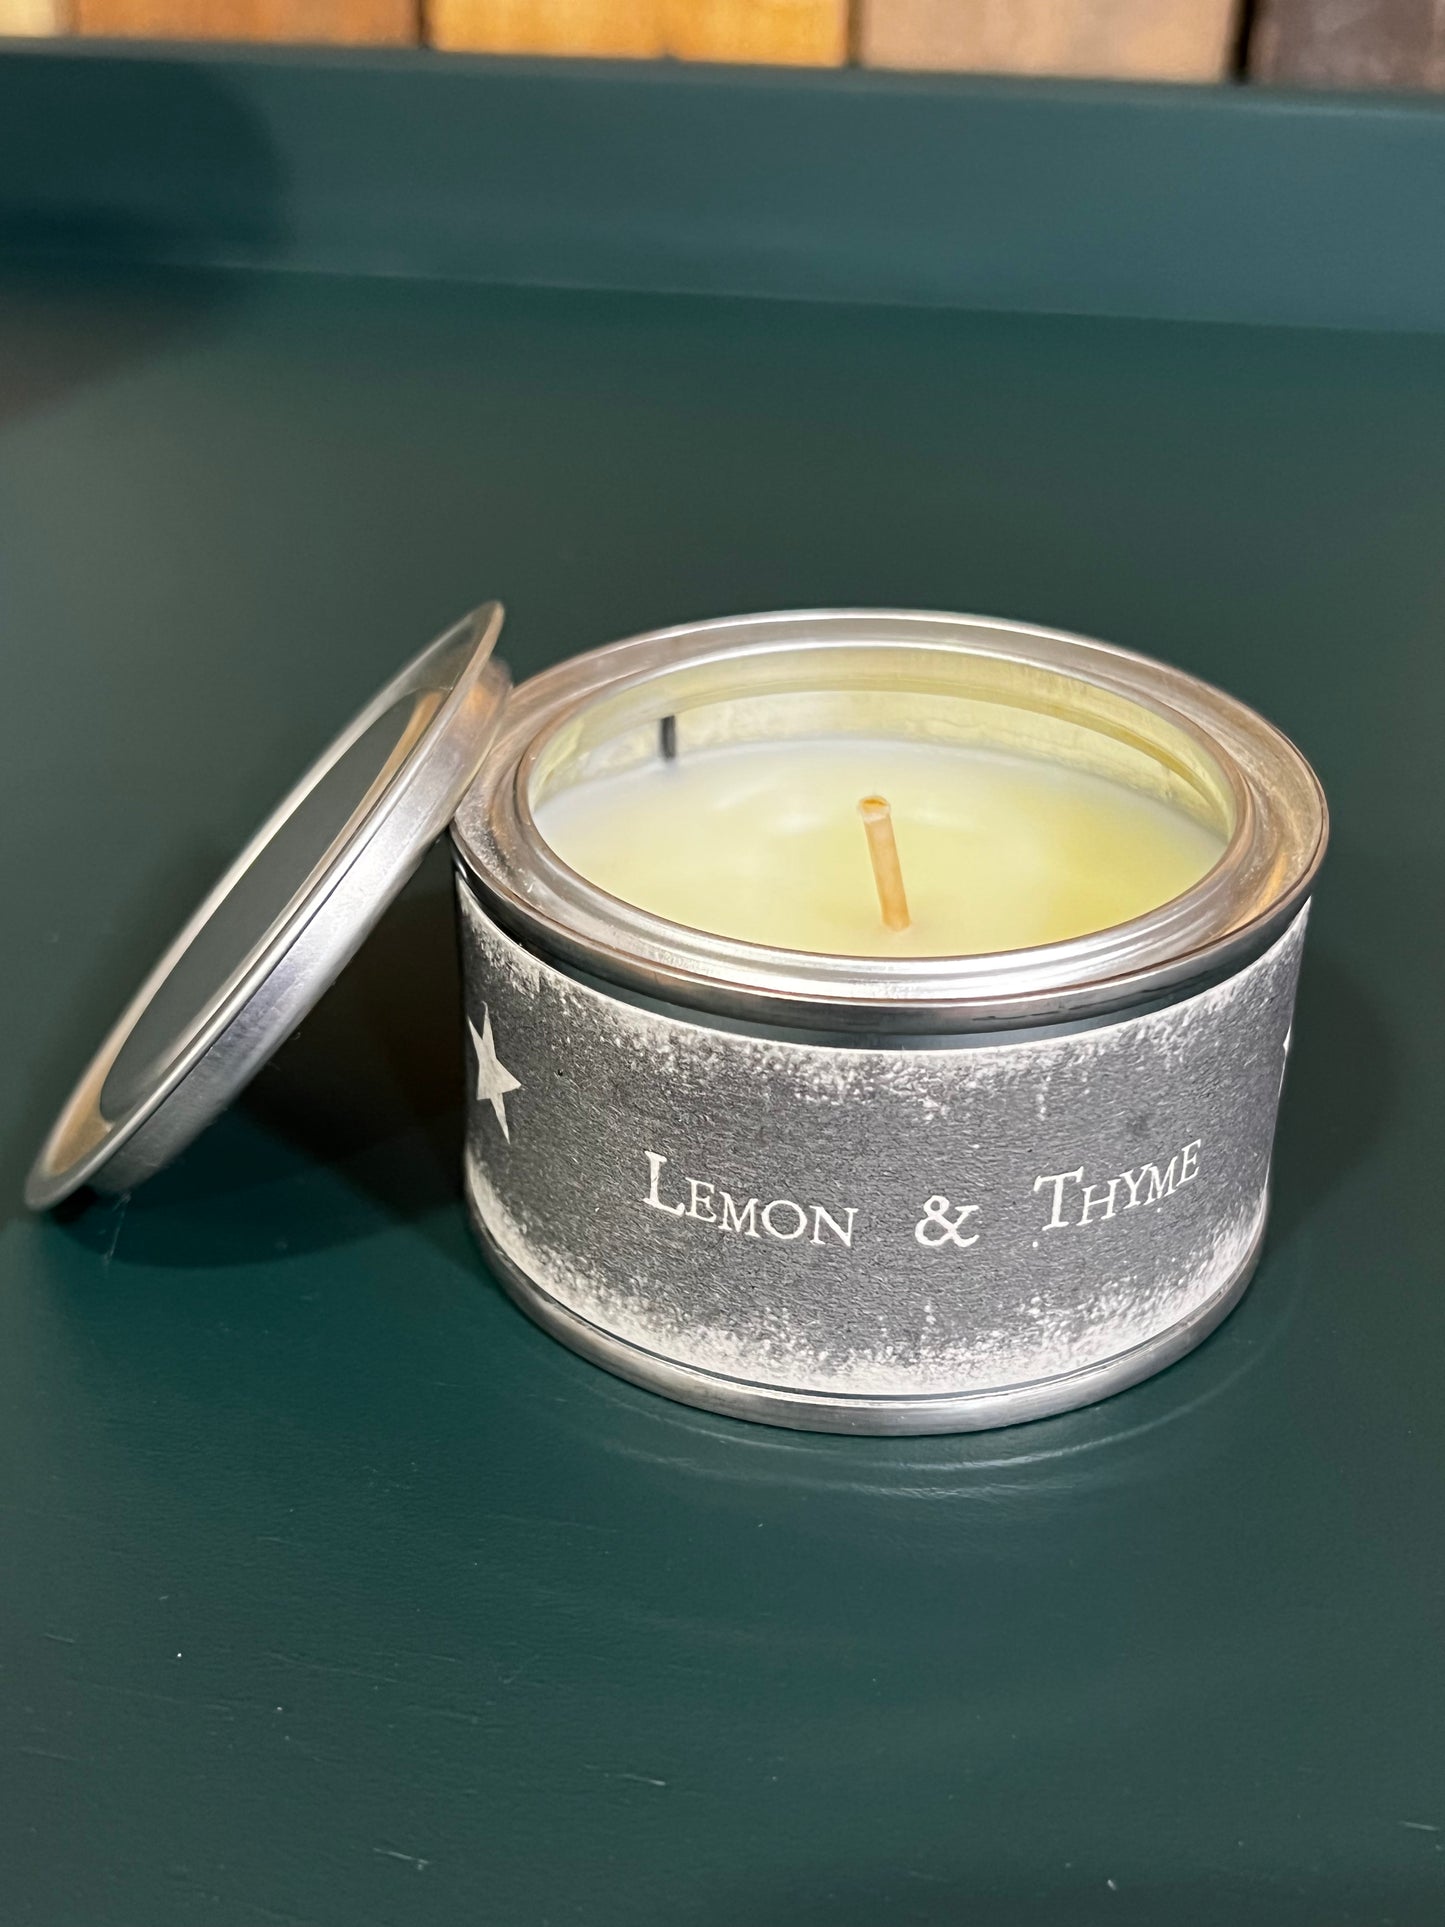 Lemon & Thyme candle